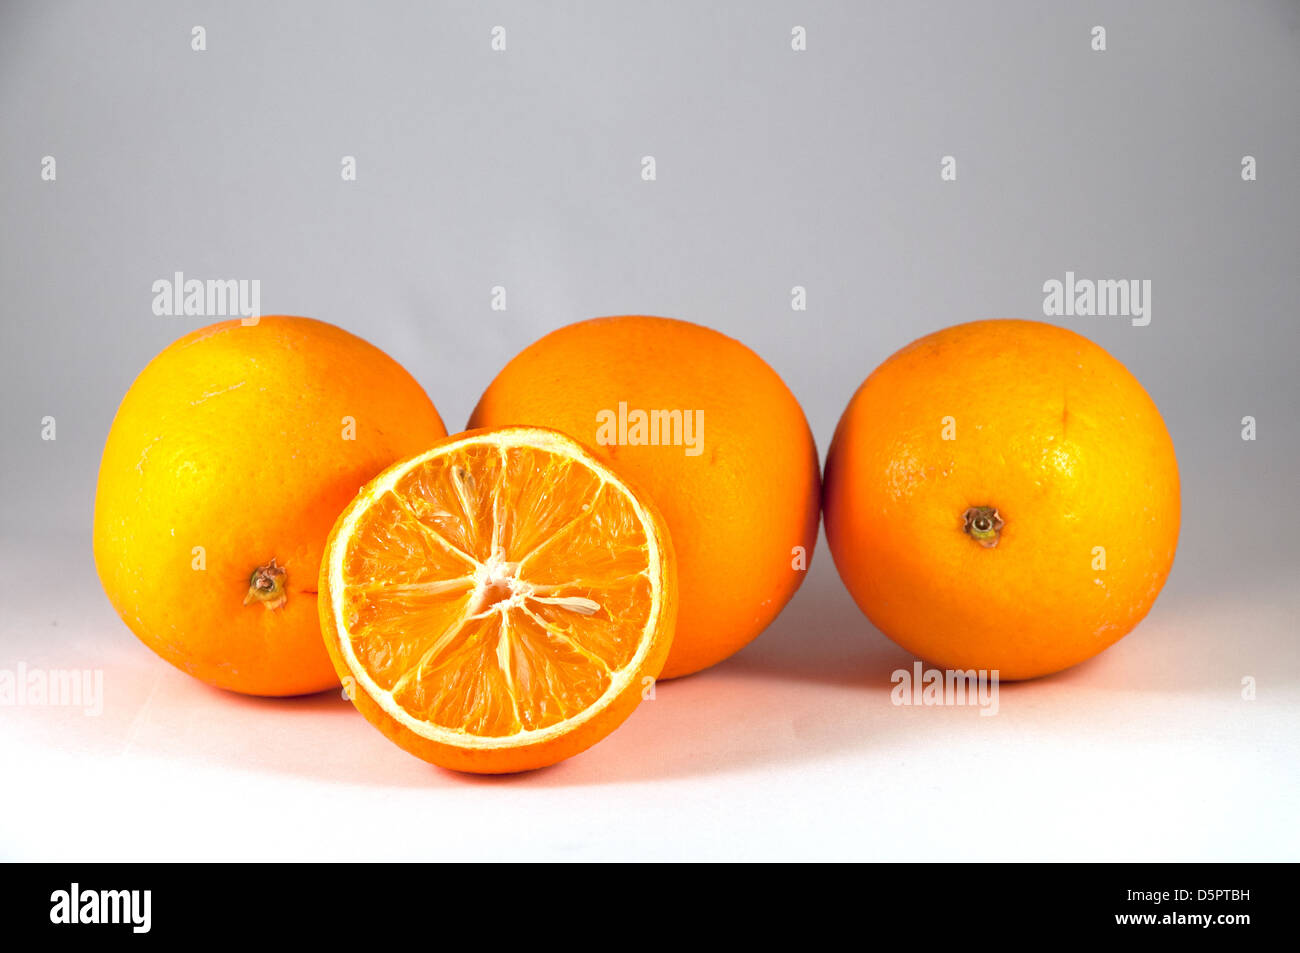 oranges to eat fruit high in vitamin c Stock Photo